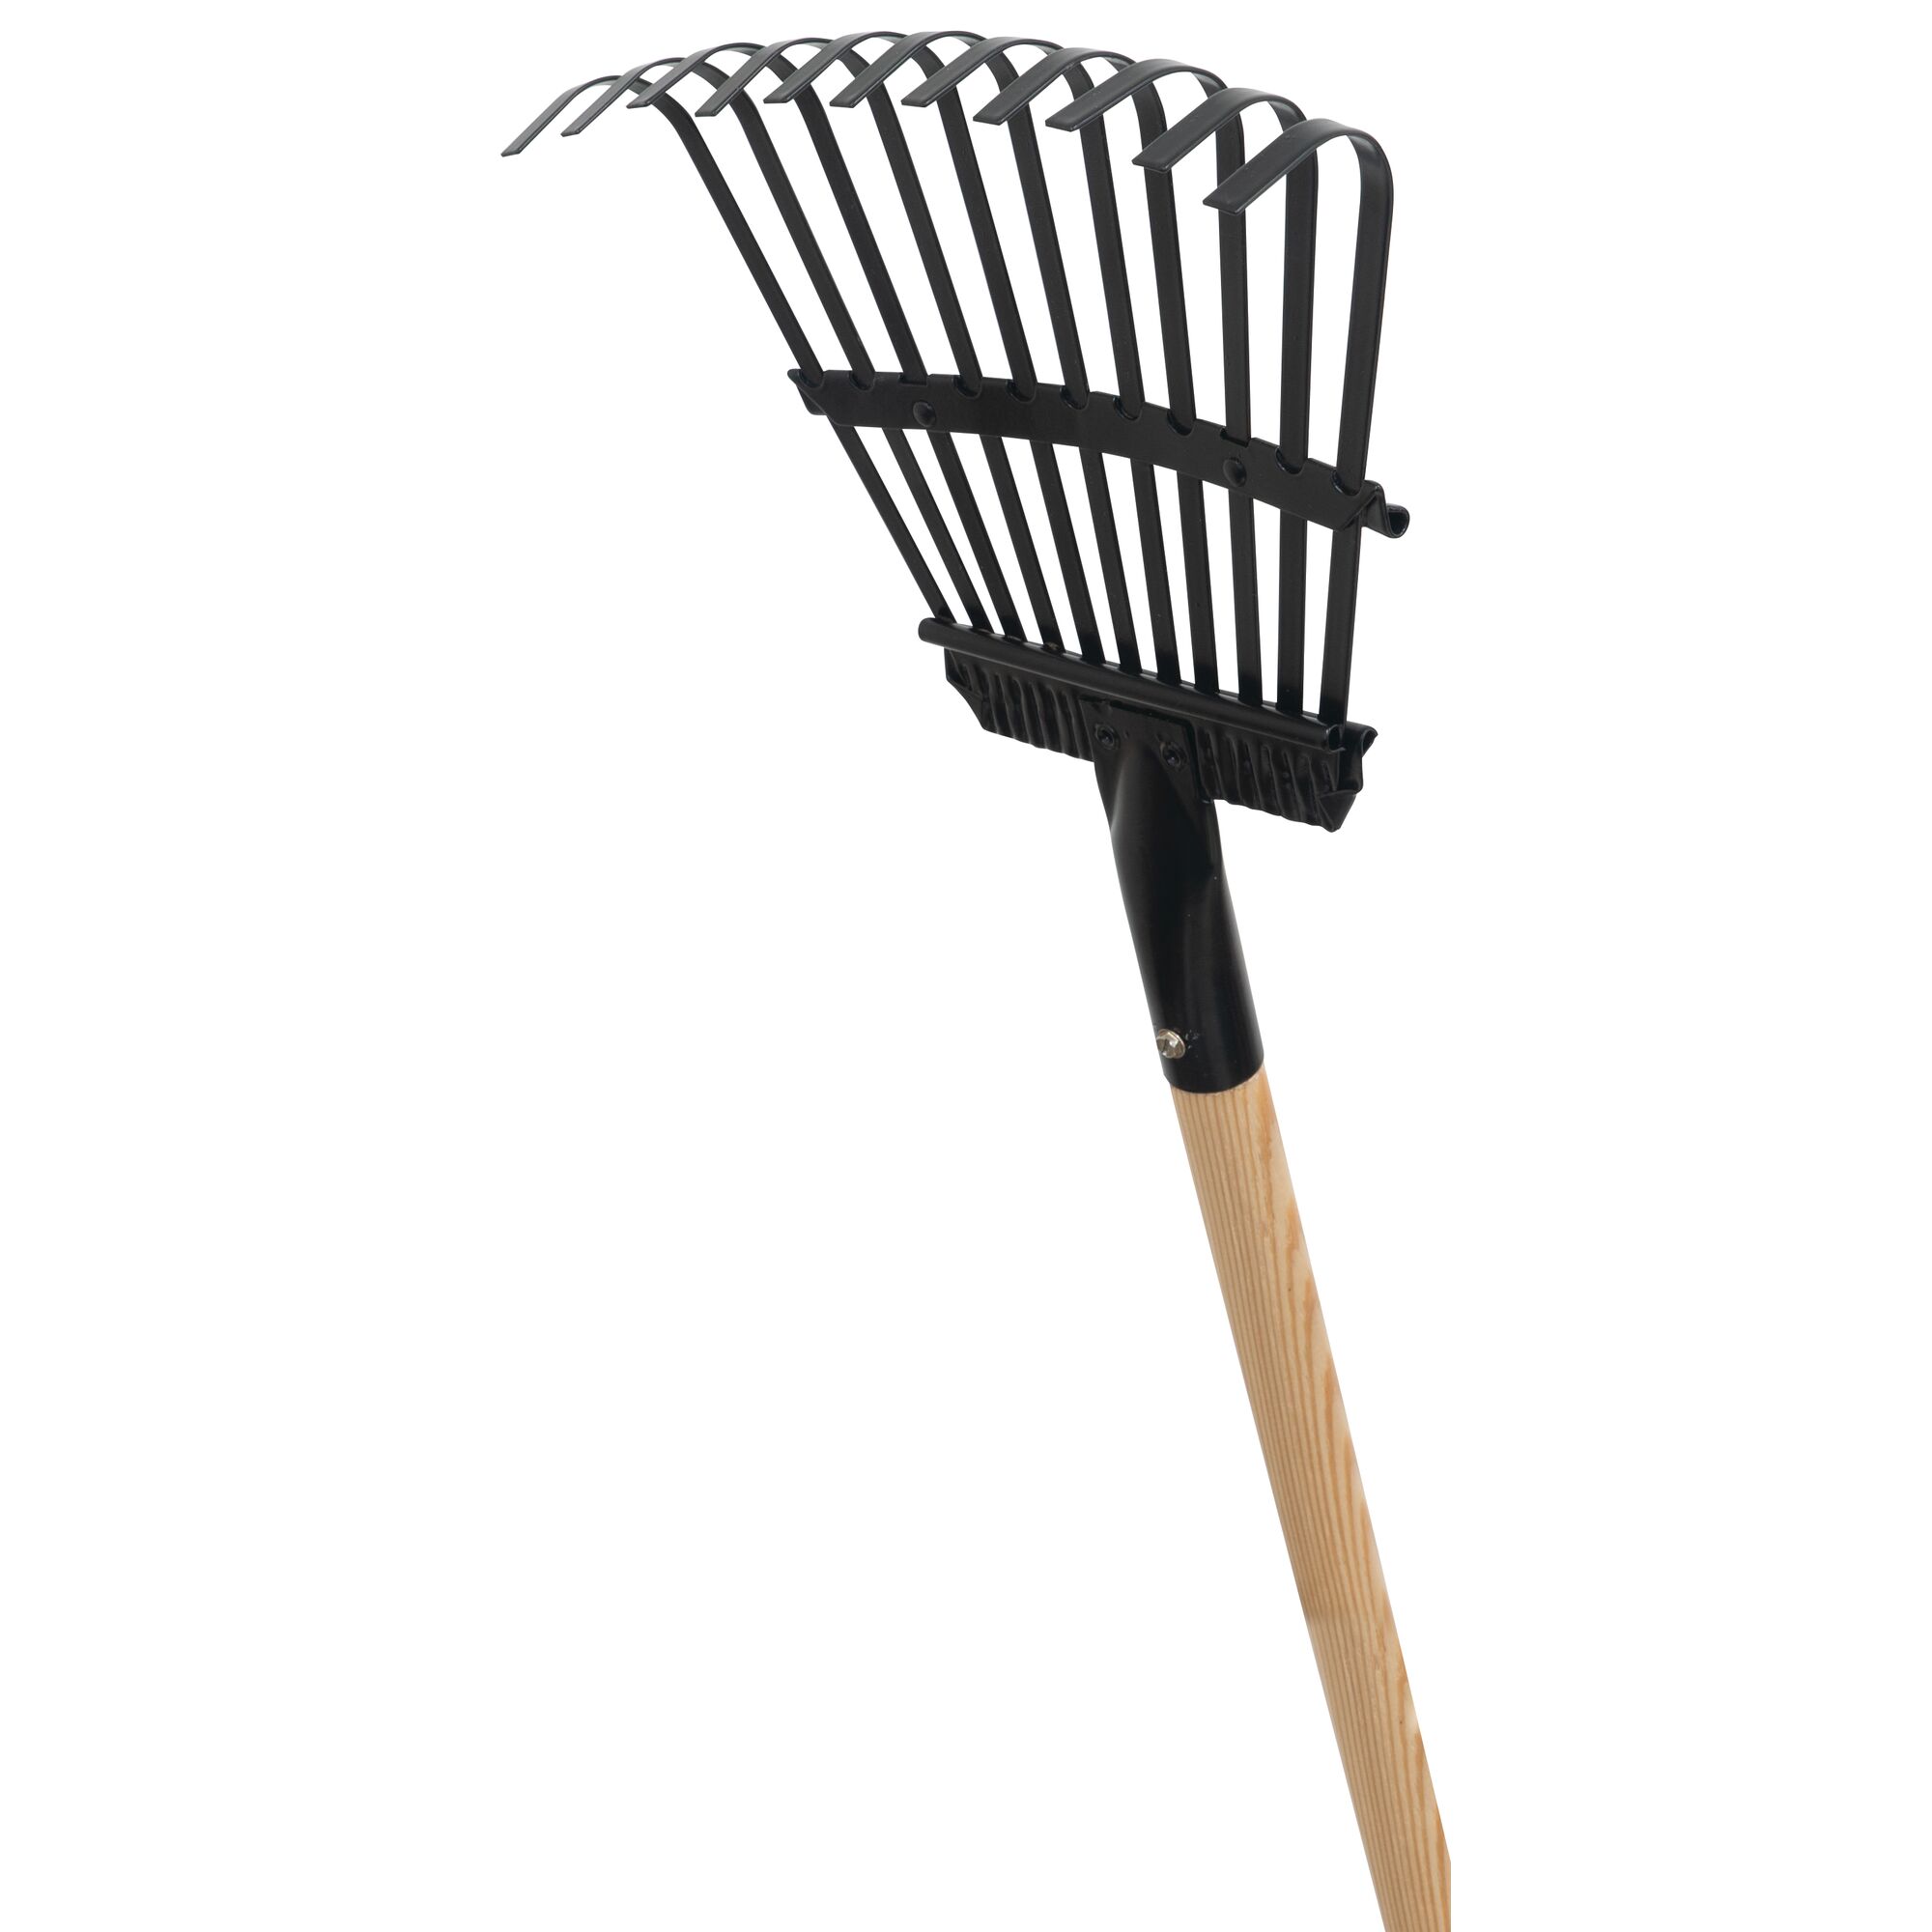 High performance tines feature of a 11 tine wood handle shrub rake.